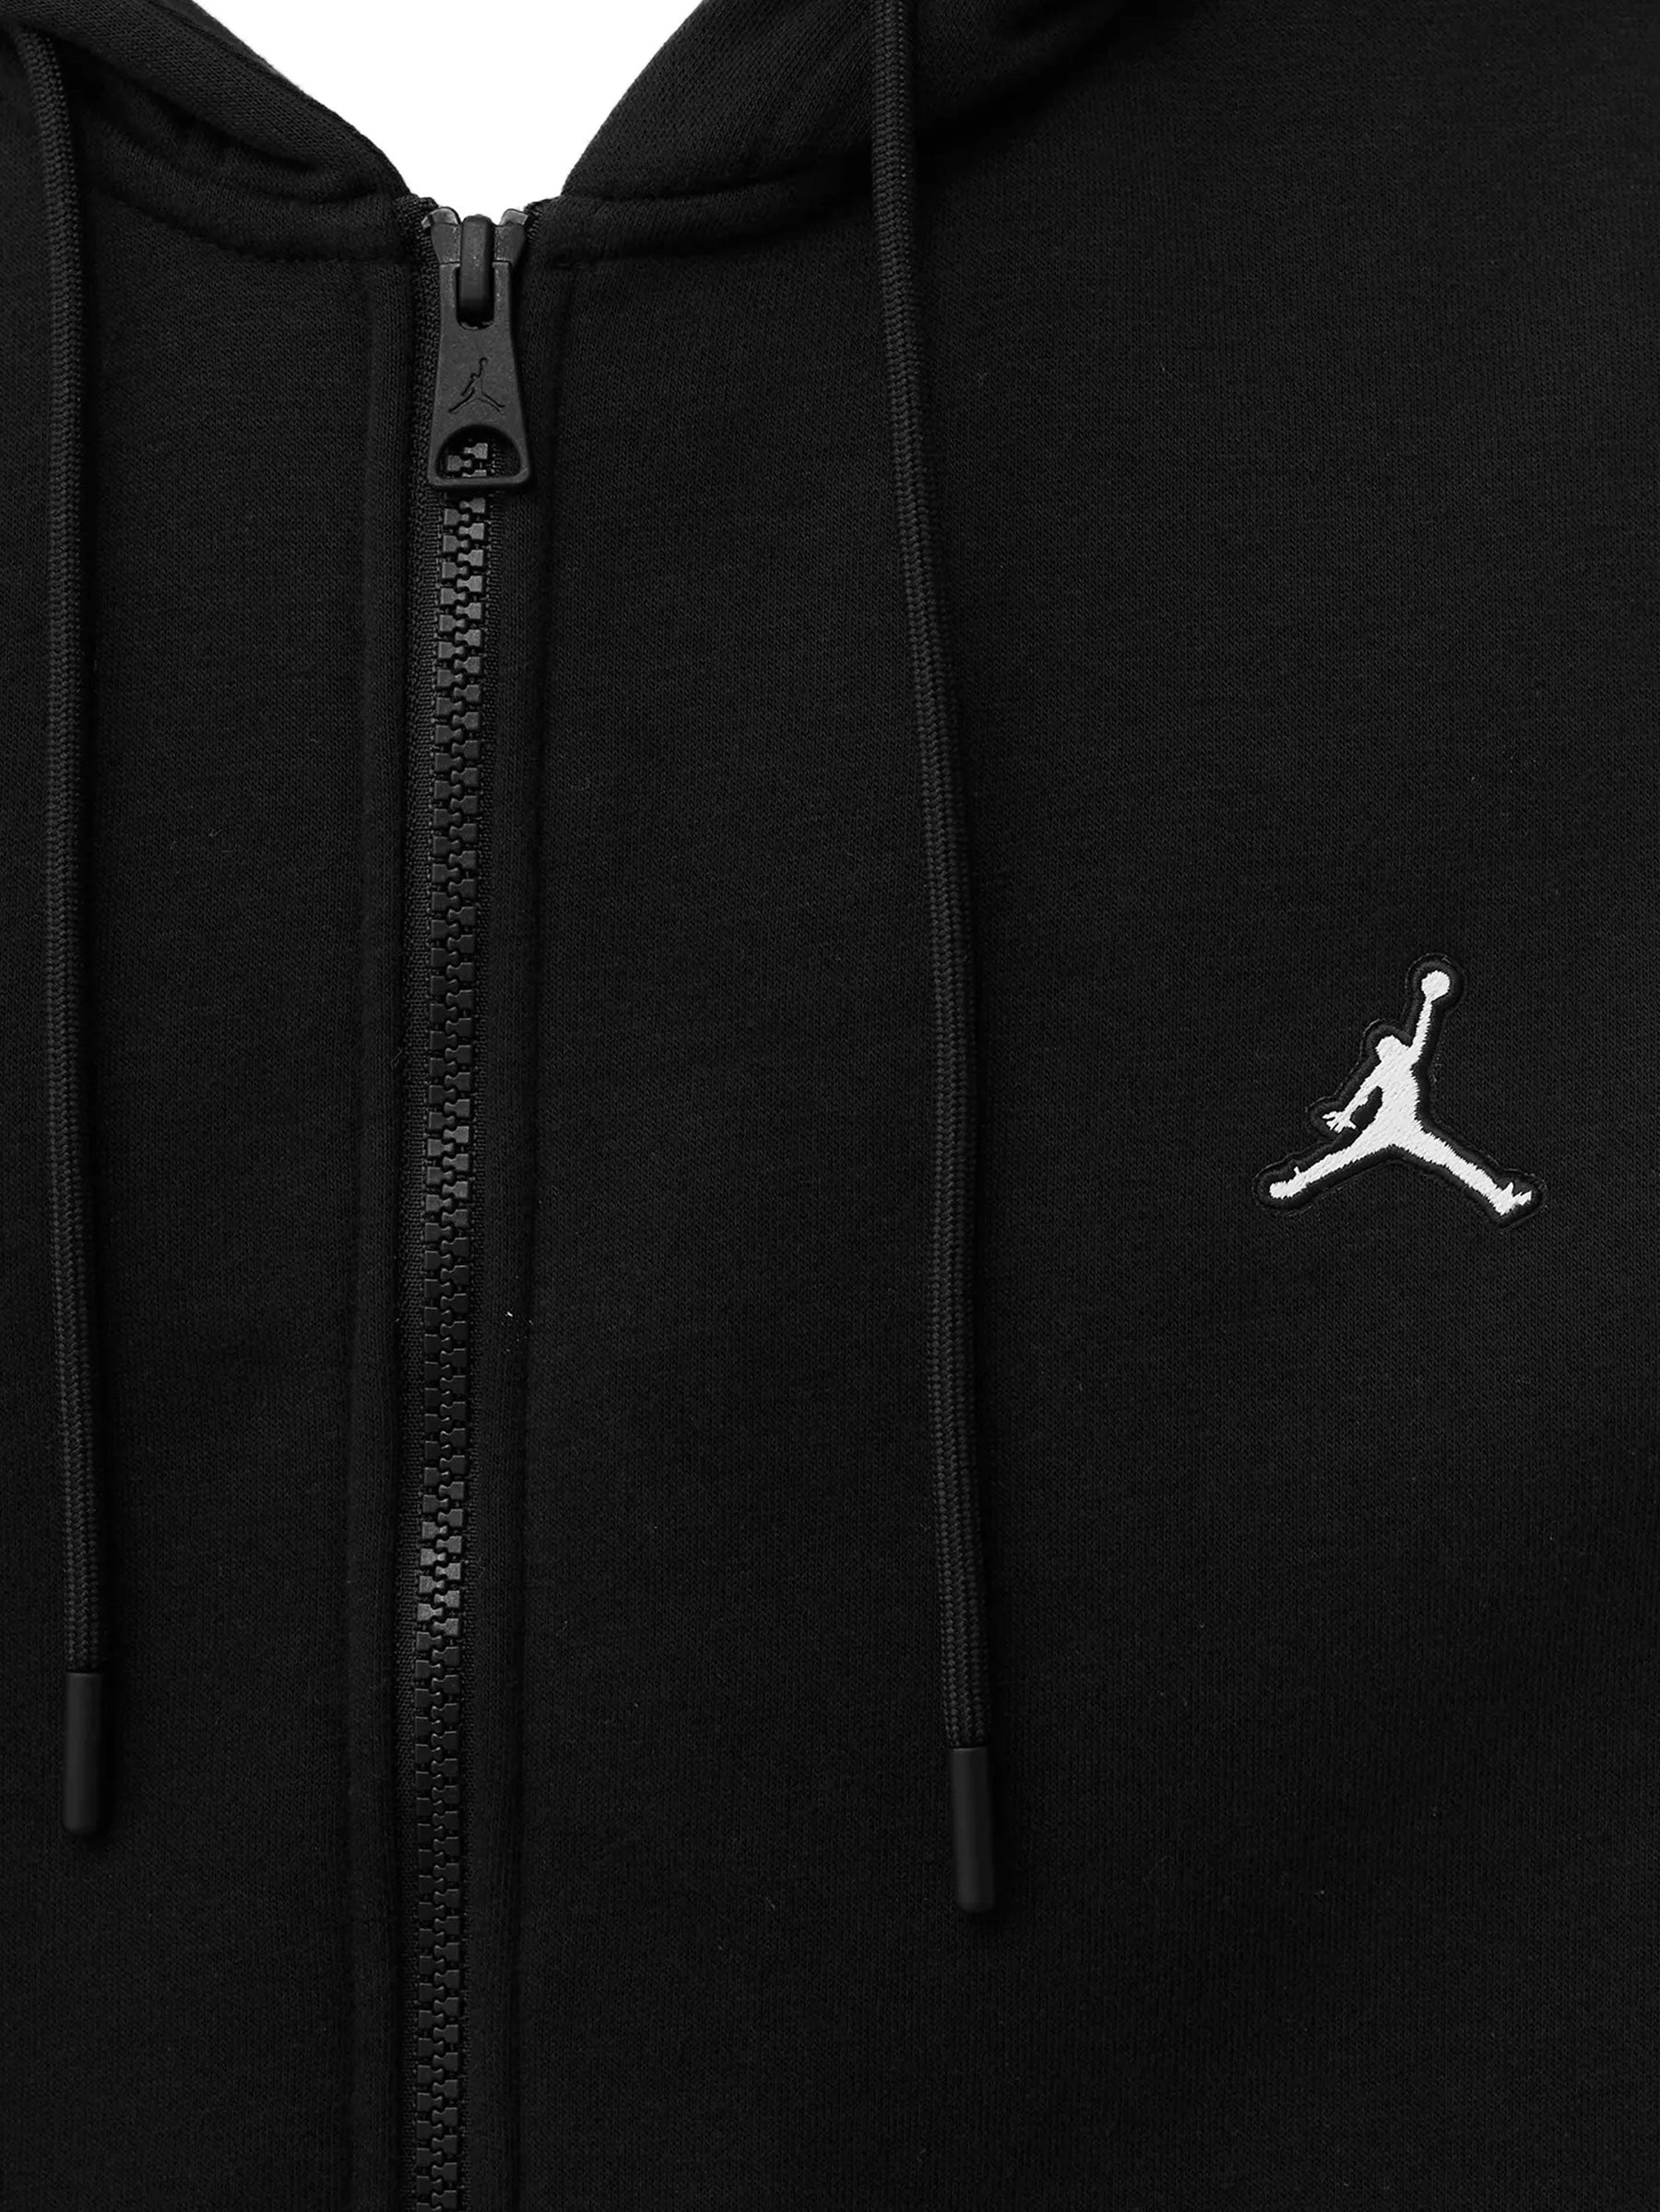 NIKE_TRK_SUIT_DQ7350 Copy of Nike Jordan Fleece Tracksuit Set NIKE RAWDENIM